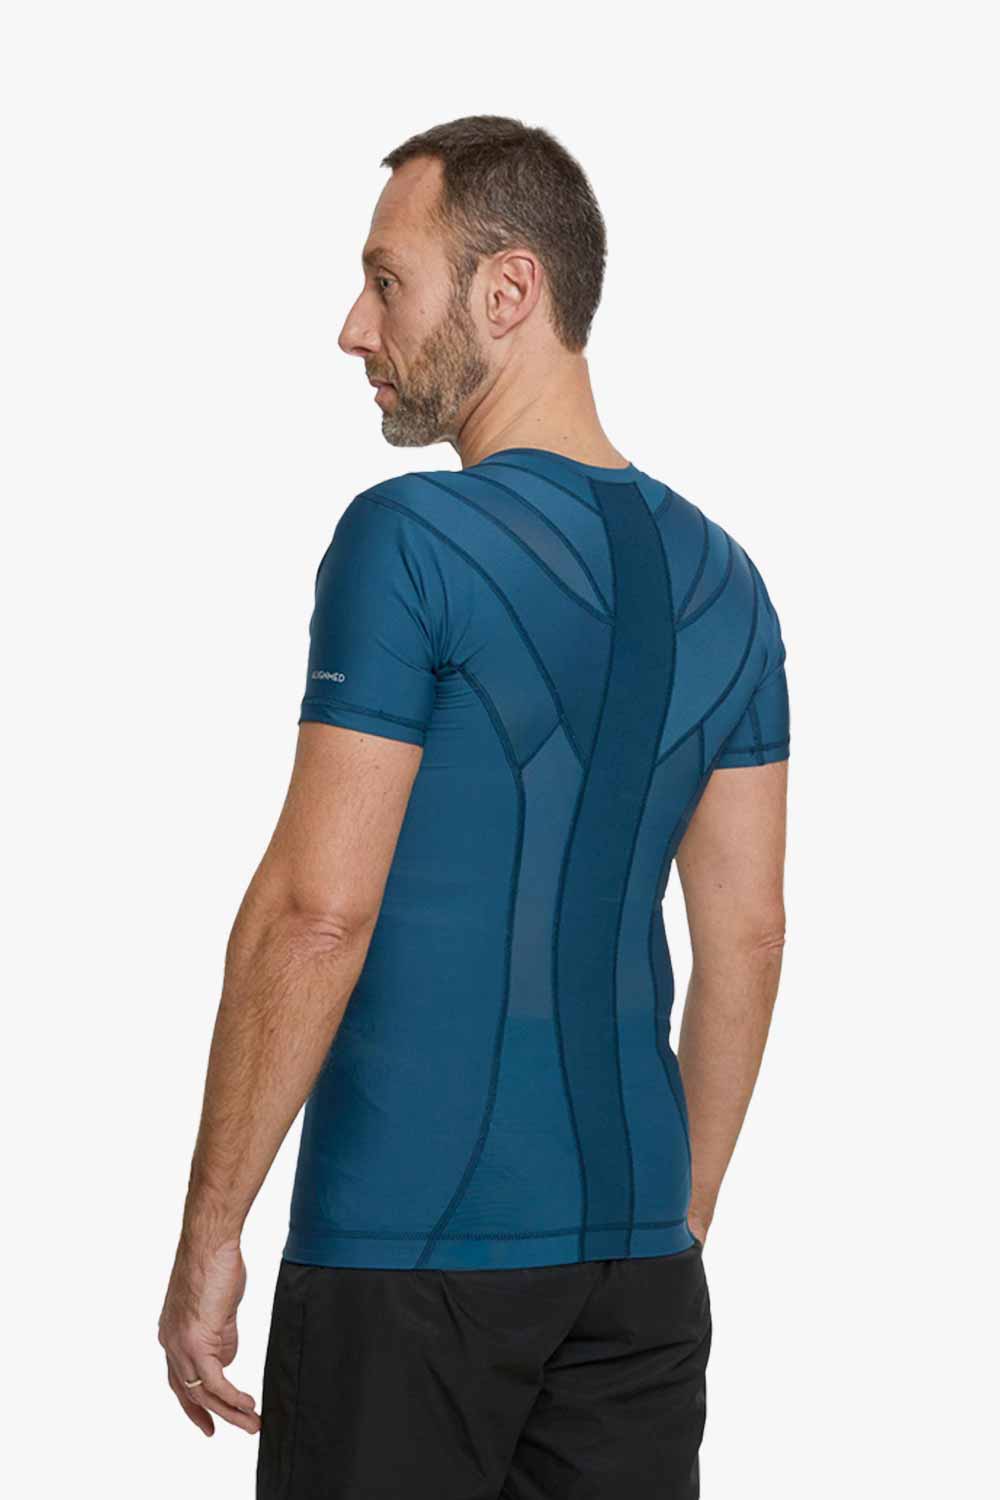 Men's Posture Shirt™ - Blau